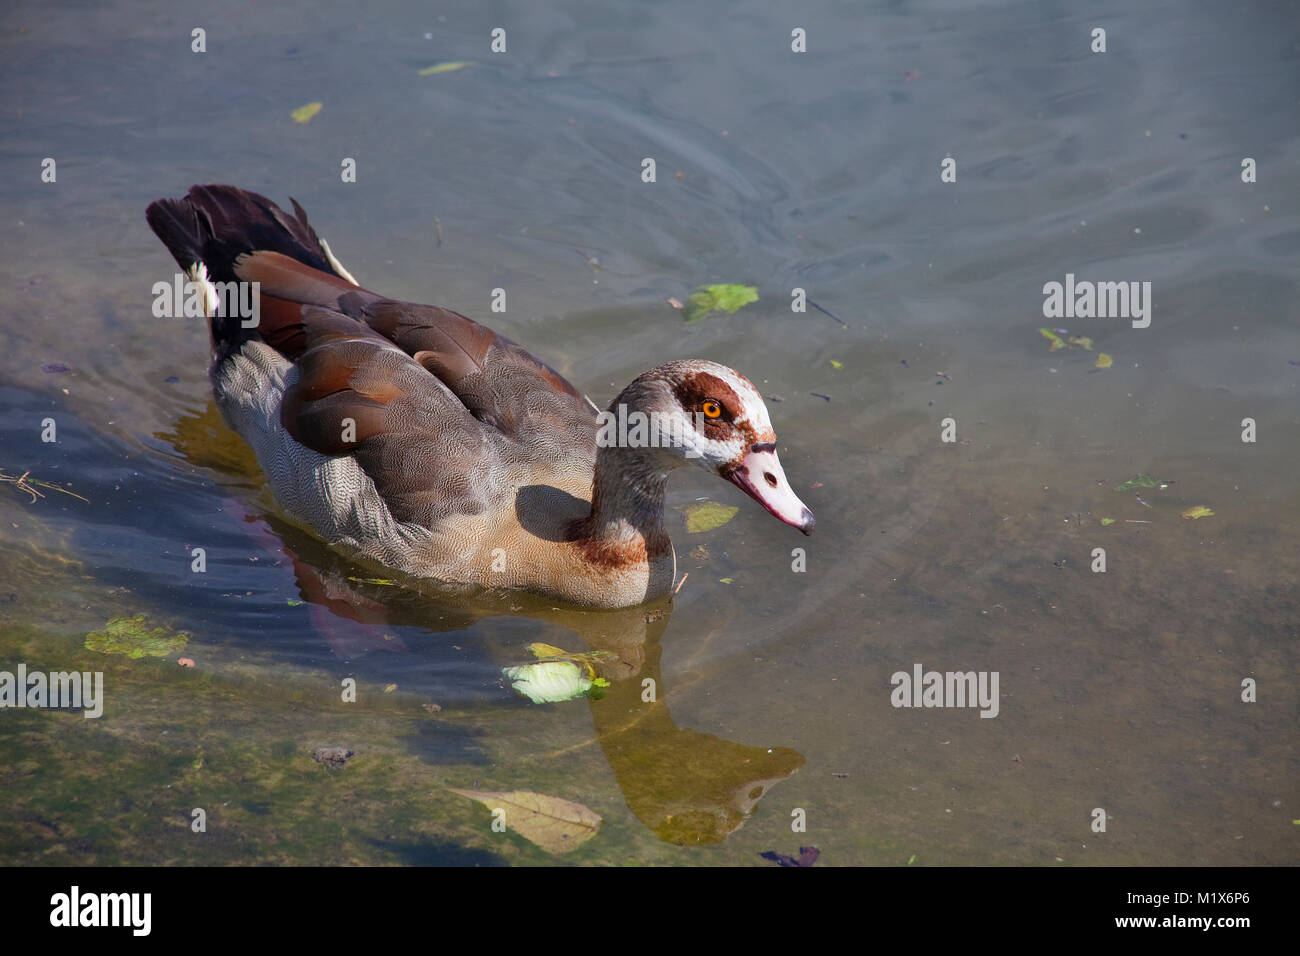 Egyptian Goose (Alopochen aegyptiacus), Piesport, Moselle river, Rhineland-Palatinate, Germany, Europe Stock Photo